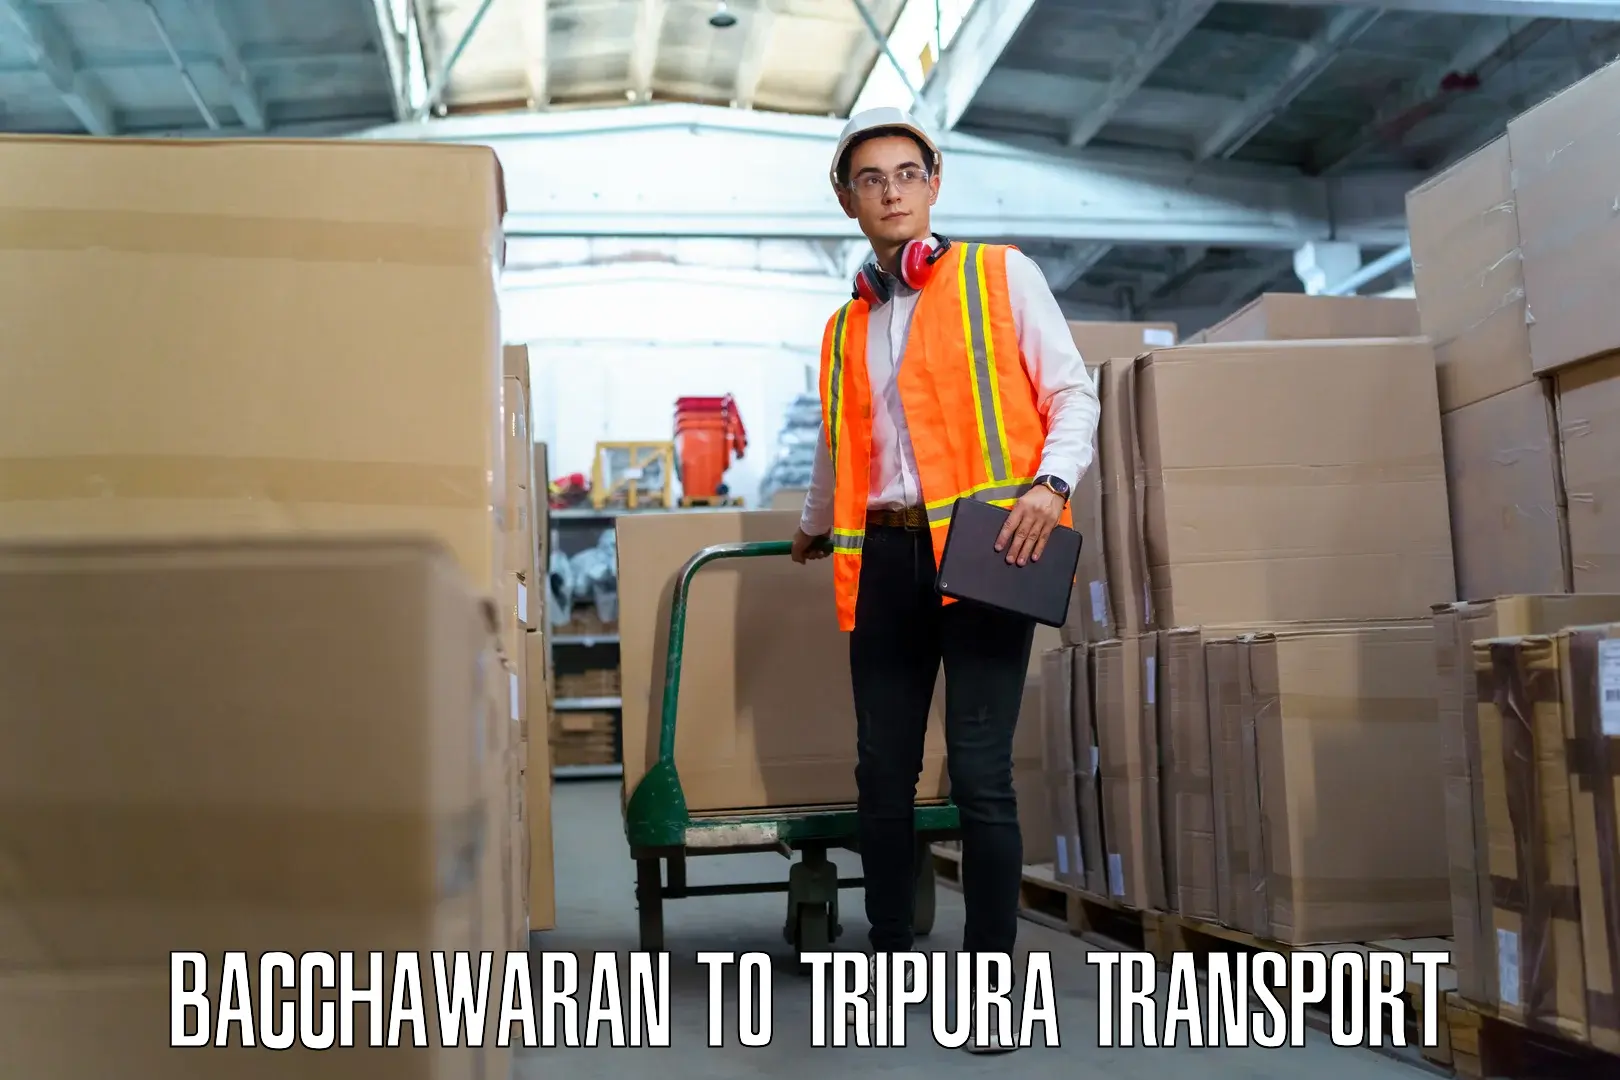 Furniture transport service Bacchawaran to West Tripura